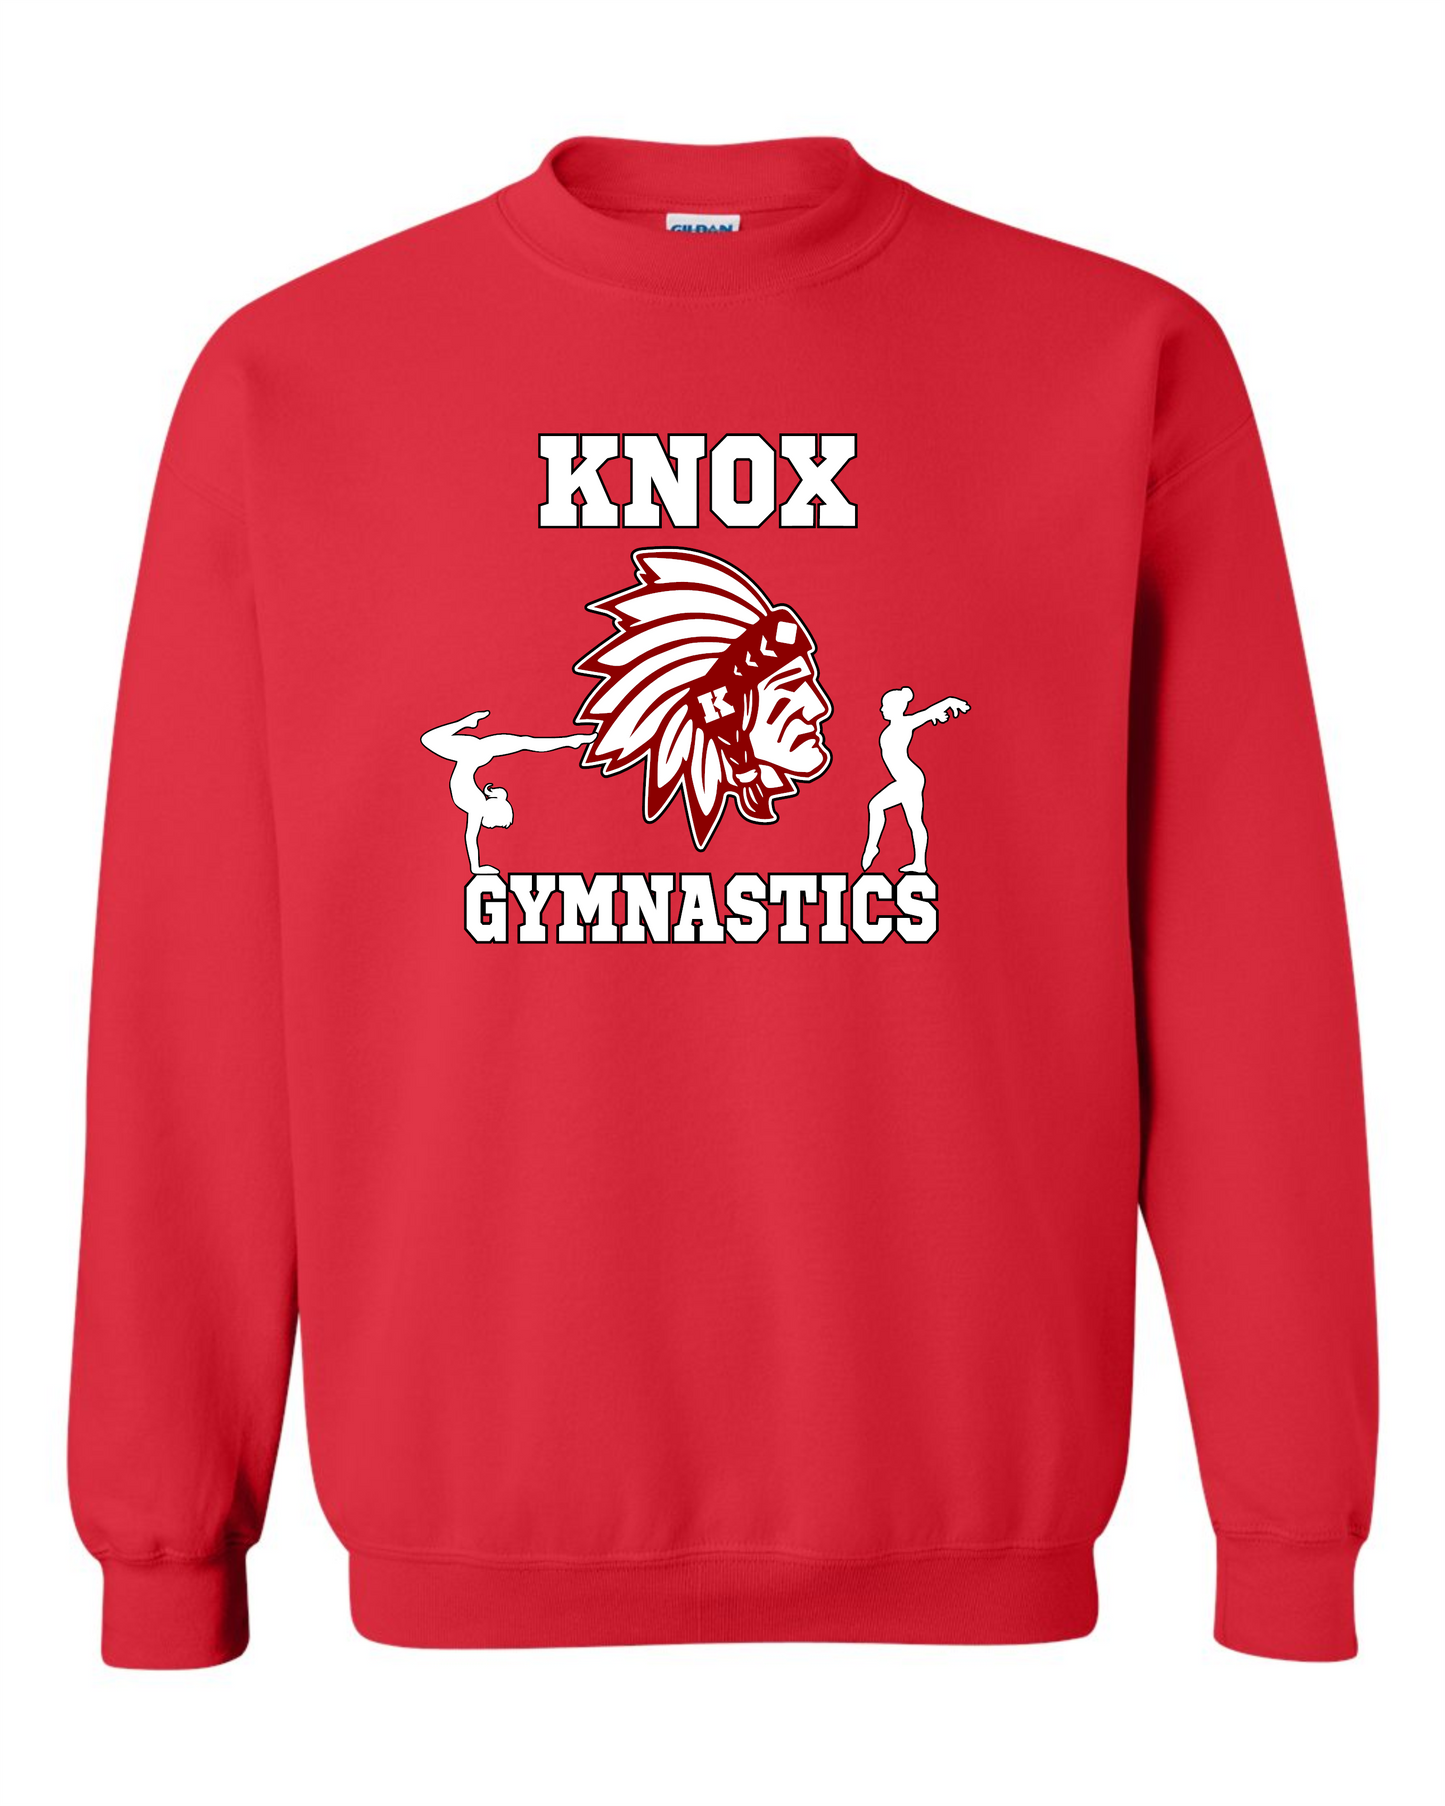 Knox Redskins Gymnastics Crewneck Sweatshirt - Red - Adult and Youth Sizes